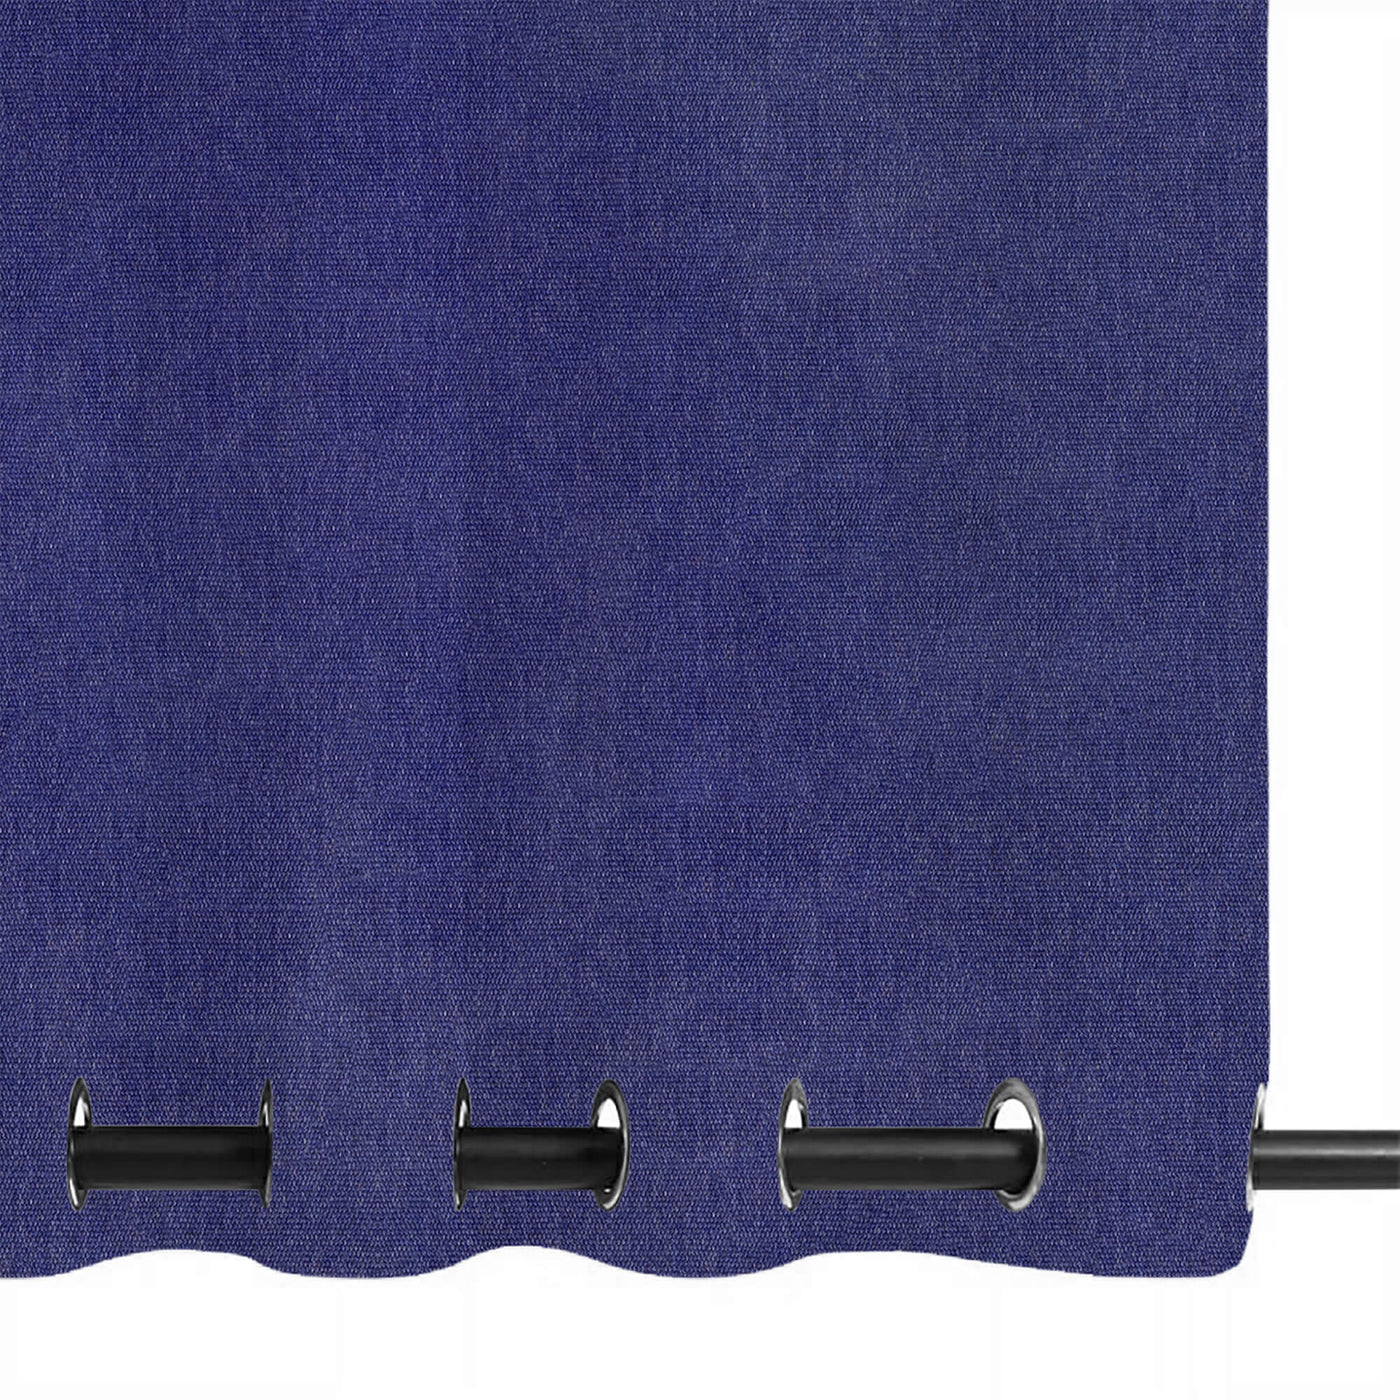 PENGI Outdoor Curtains Waterproof - Mix Blue Granite